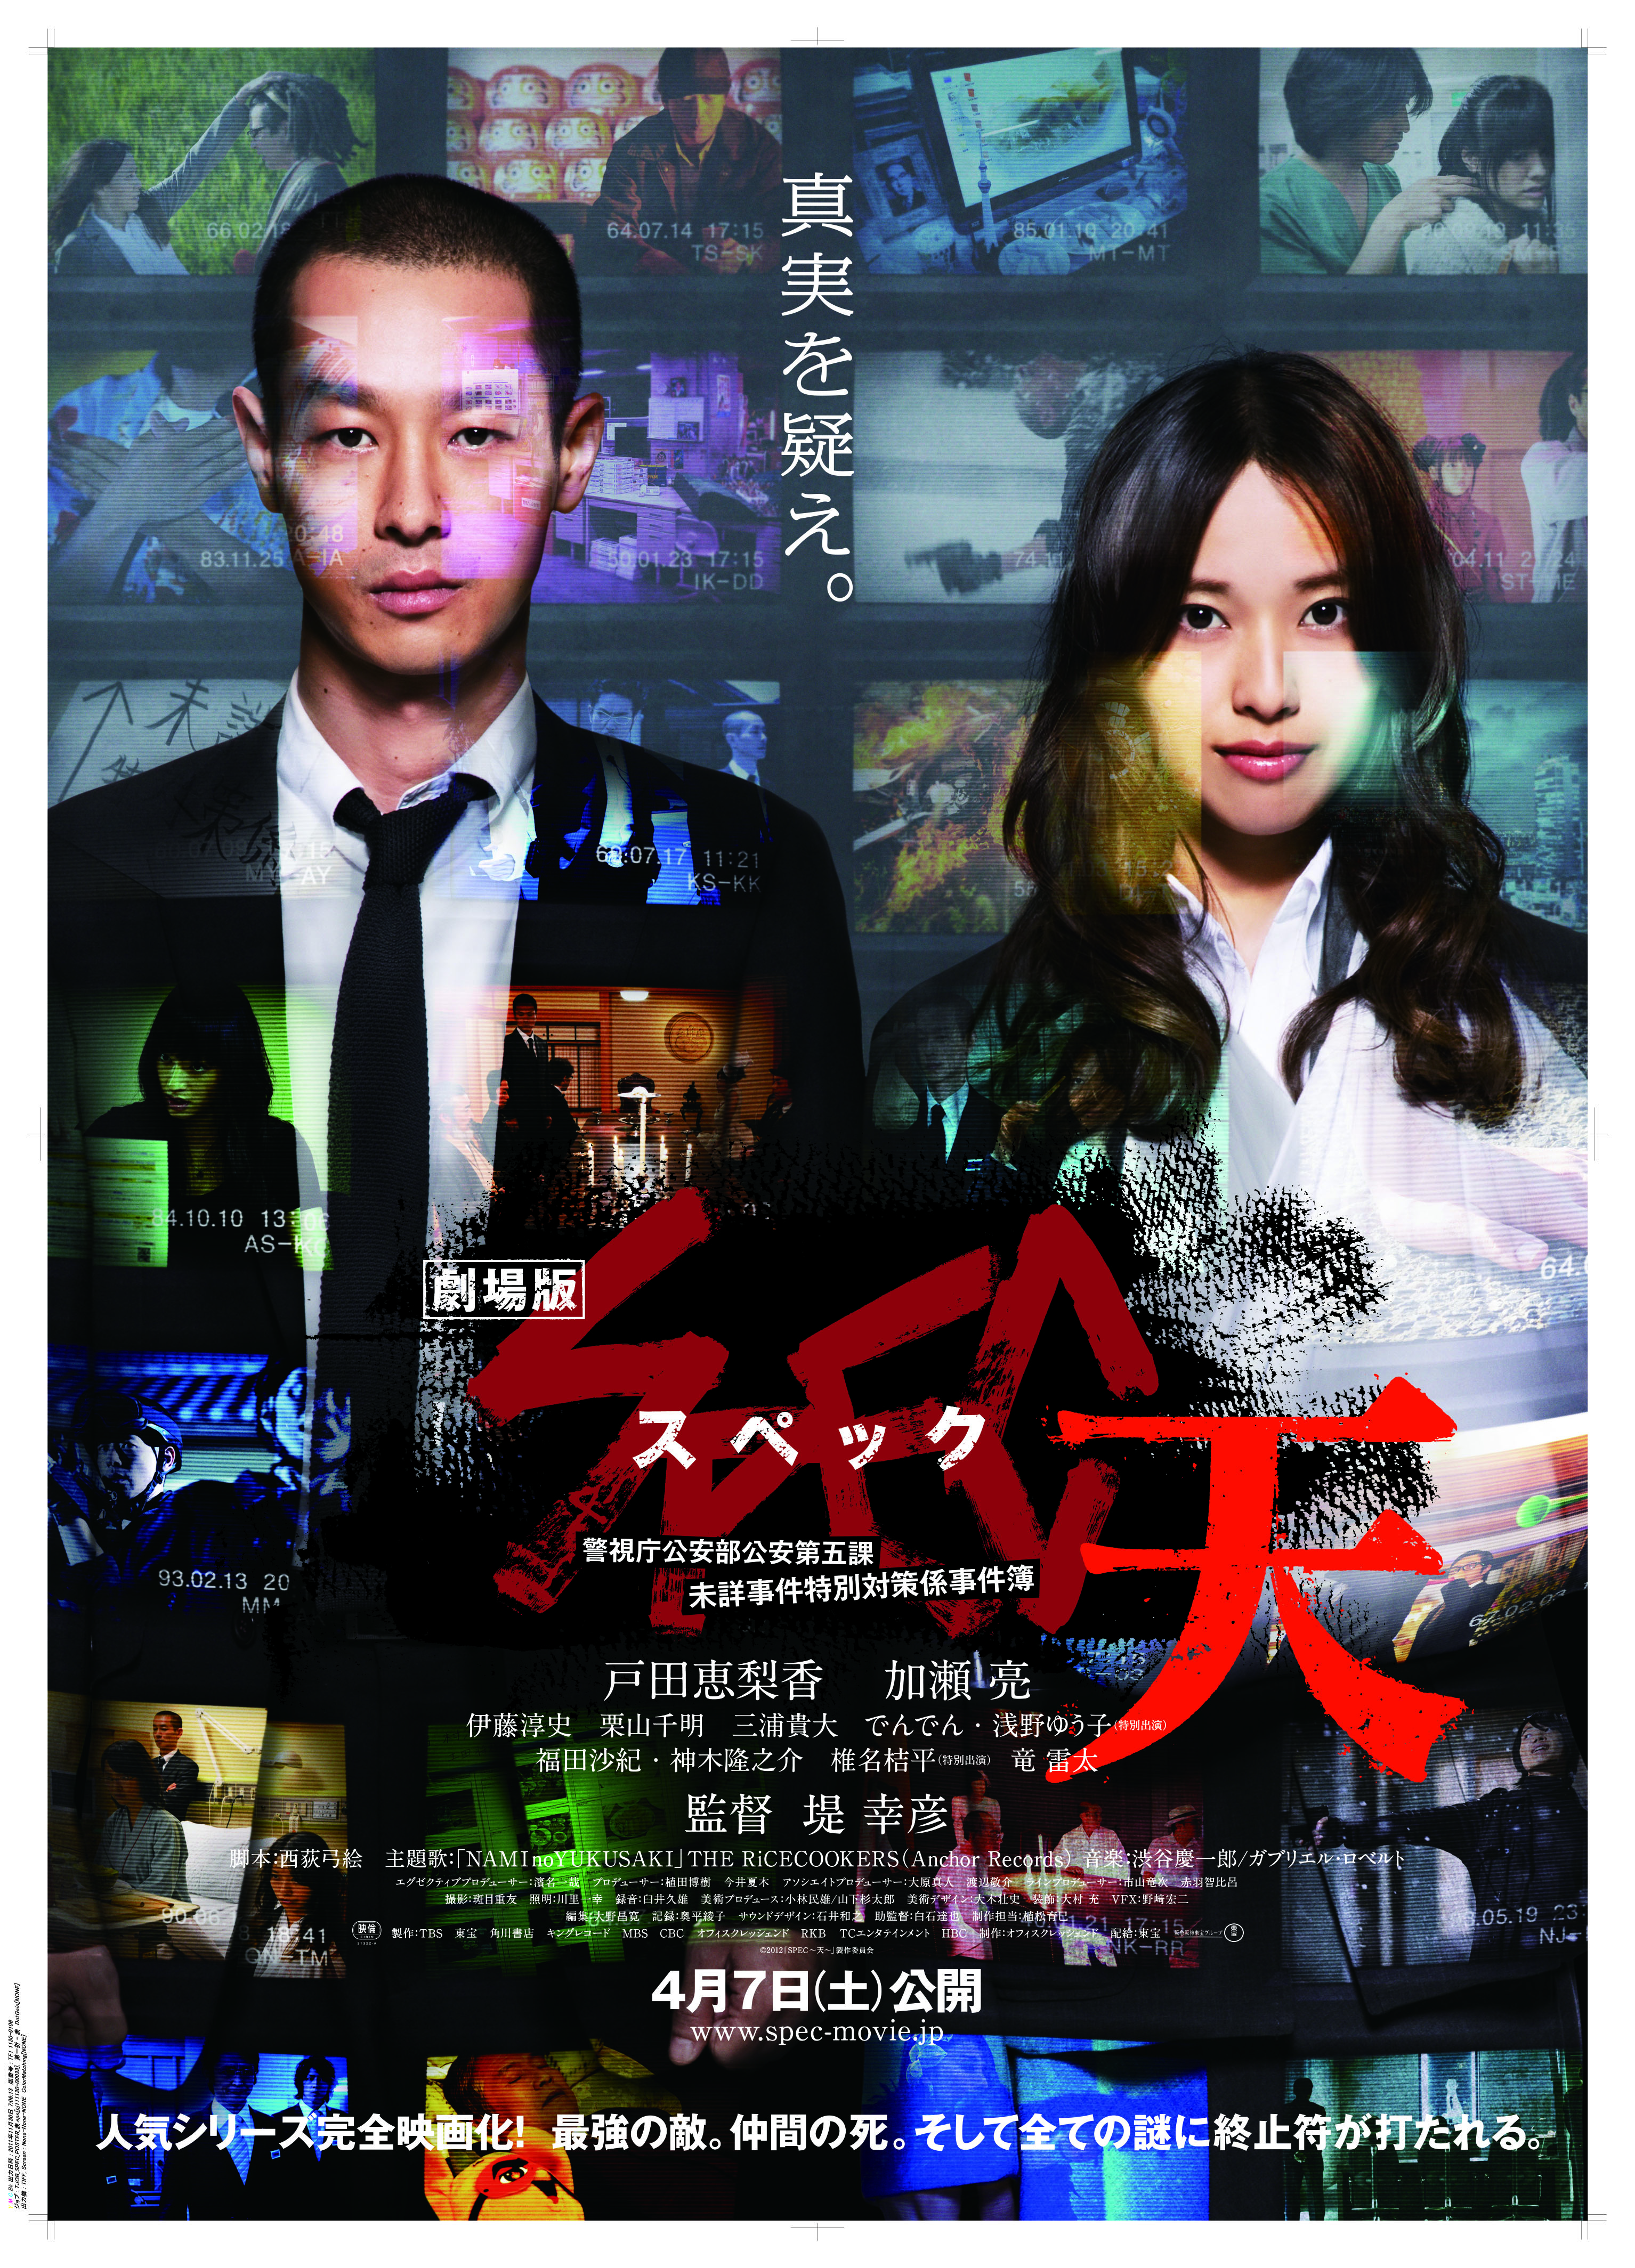 SPEC: Heaven (2012) Main Poster